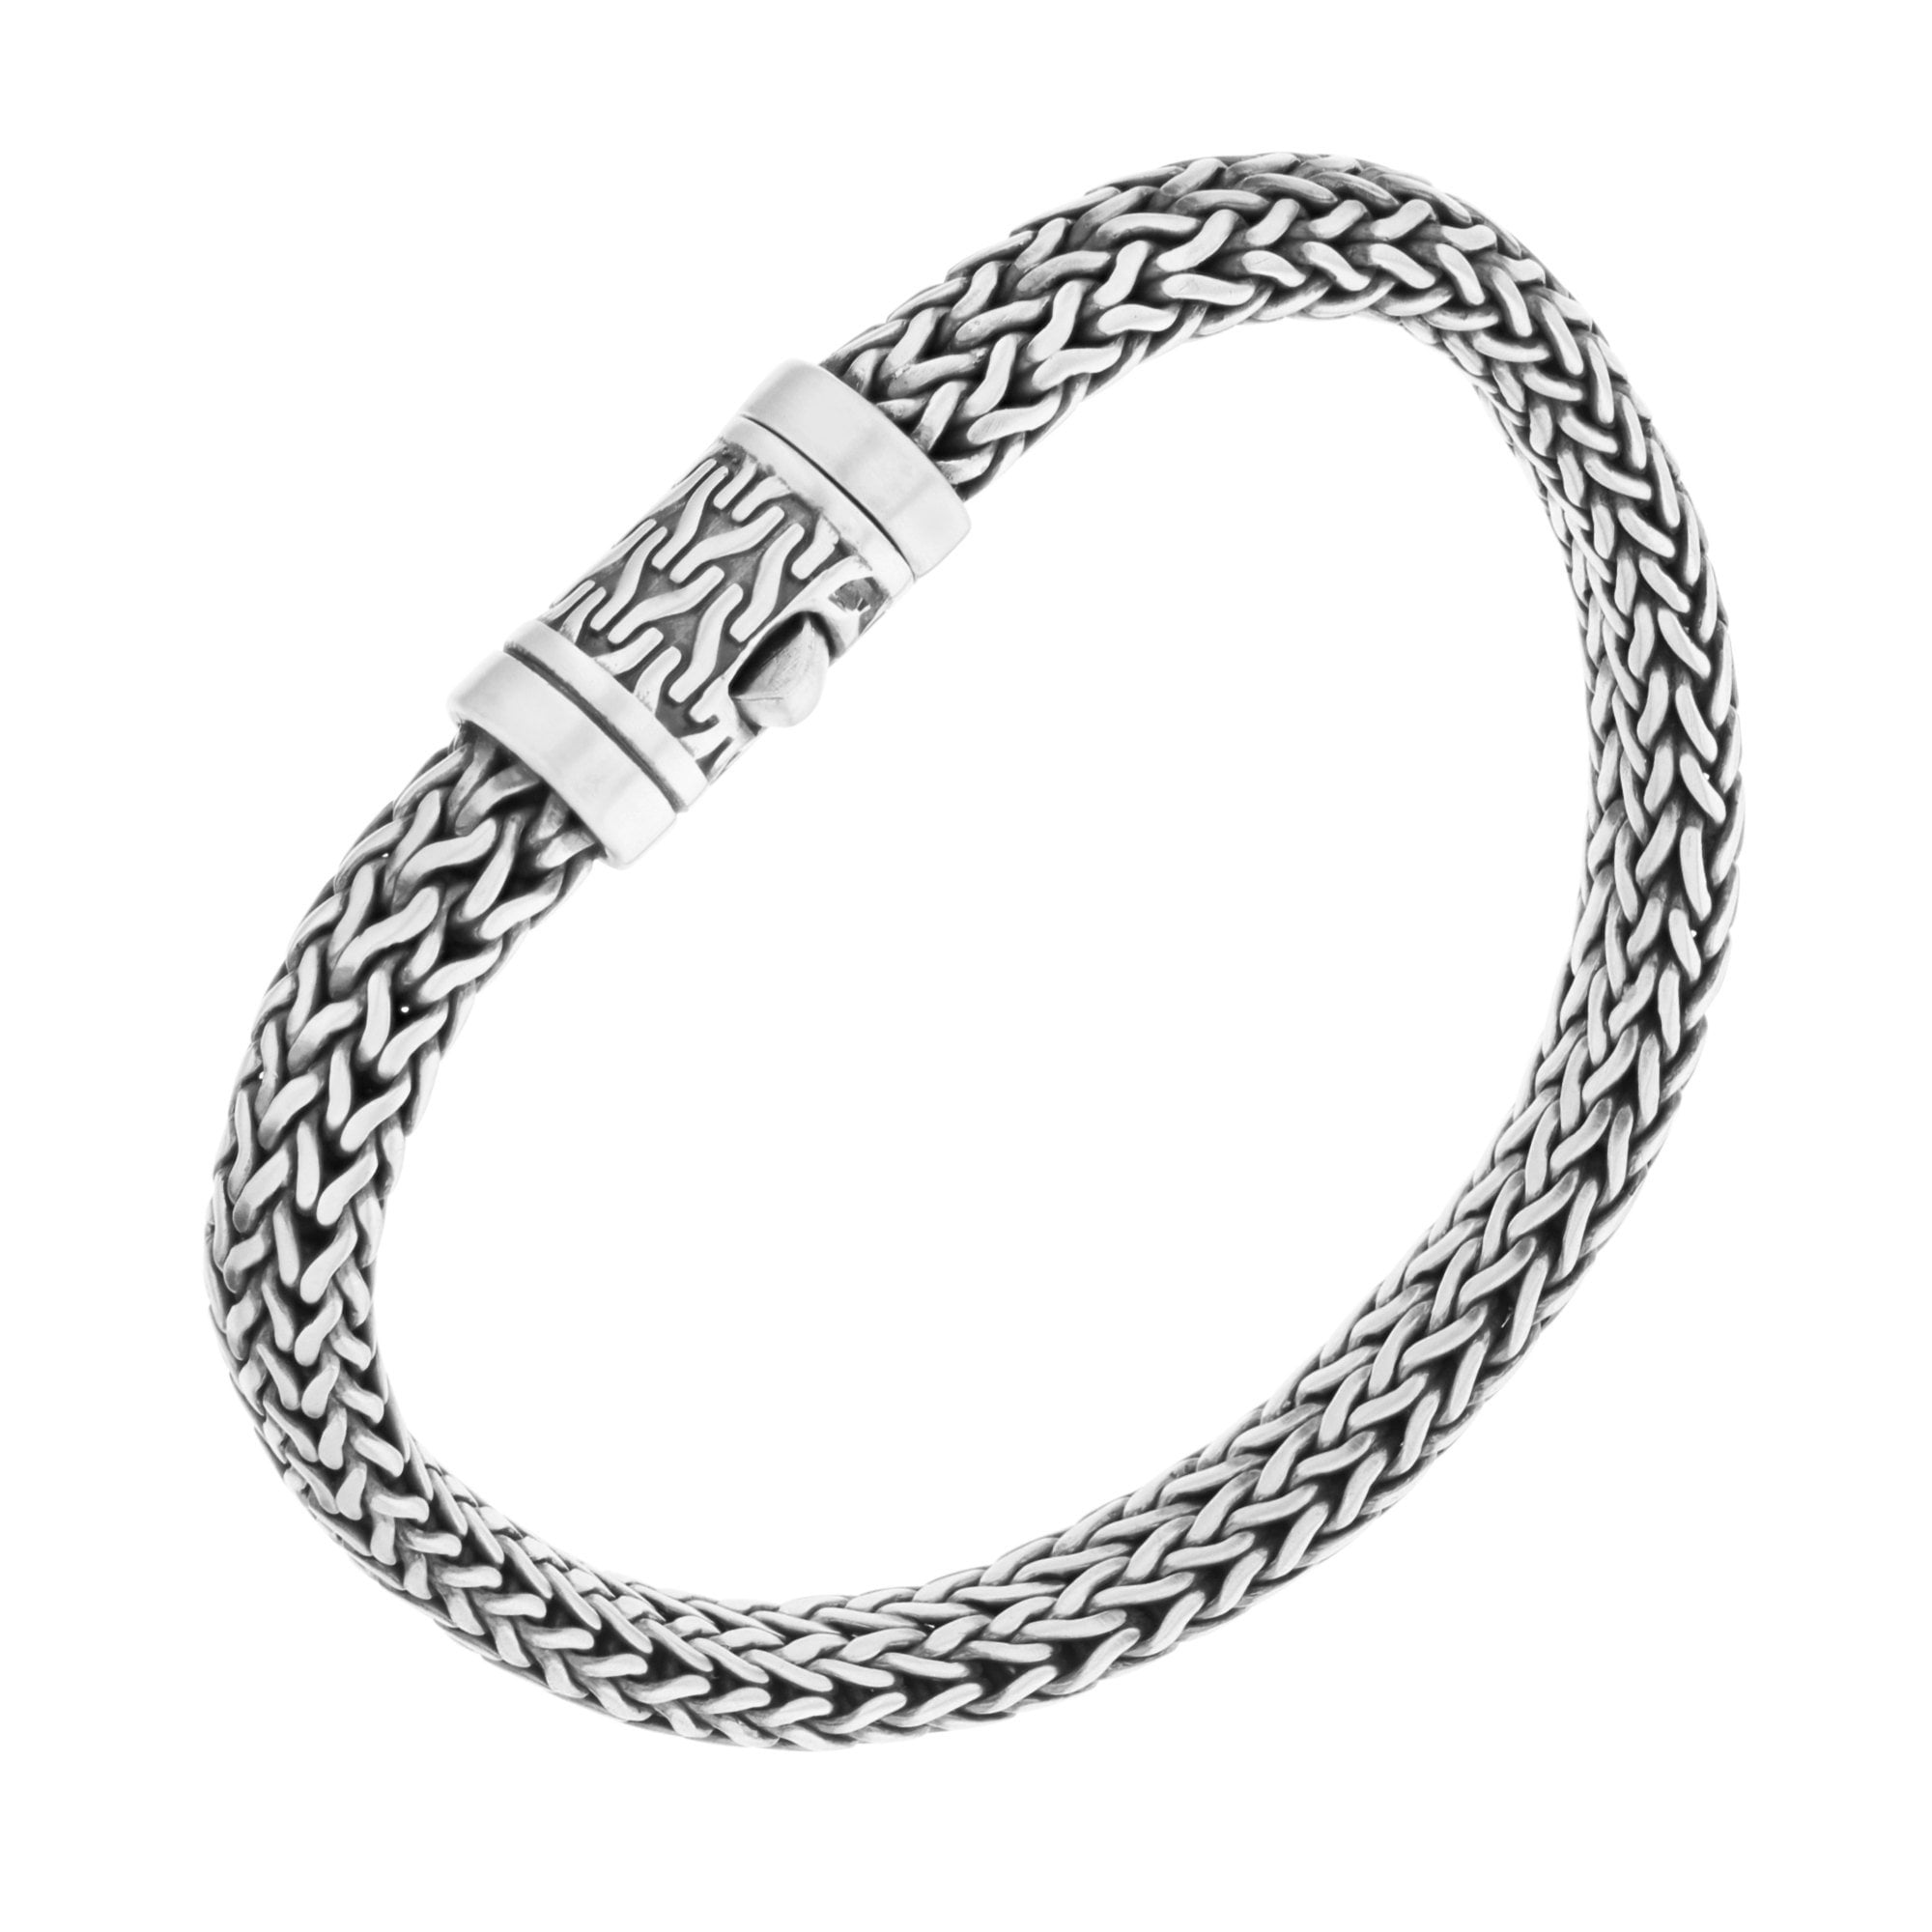 1 Carat Diamond Triangle Shaped Link Bracelet in 925 Sterling Silver (7.5  Inch) - Walmart.com